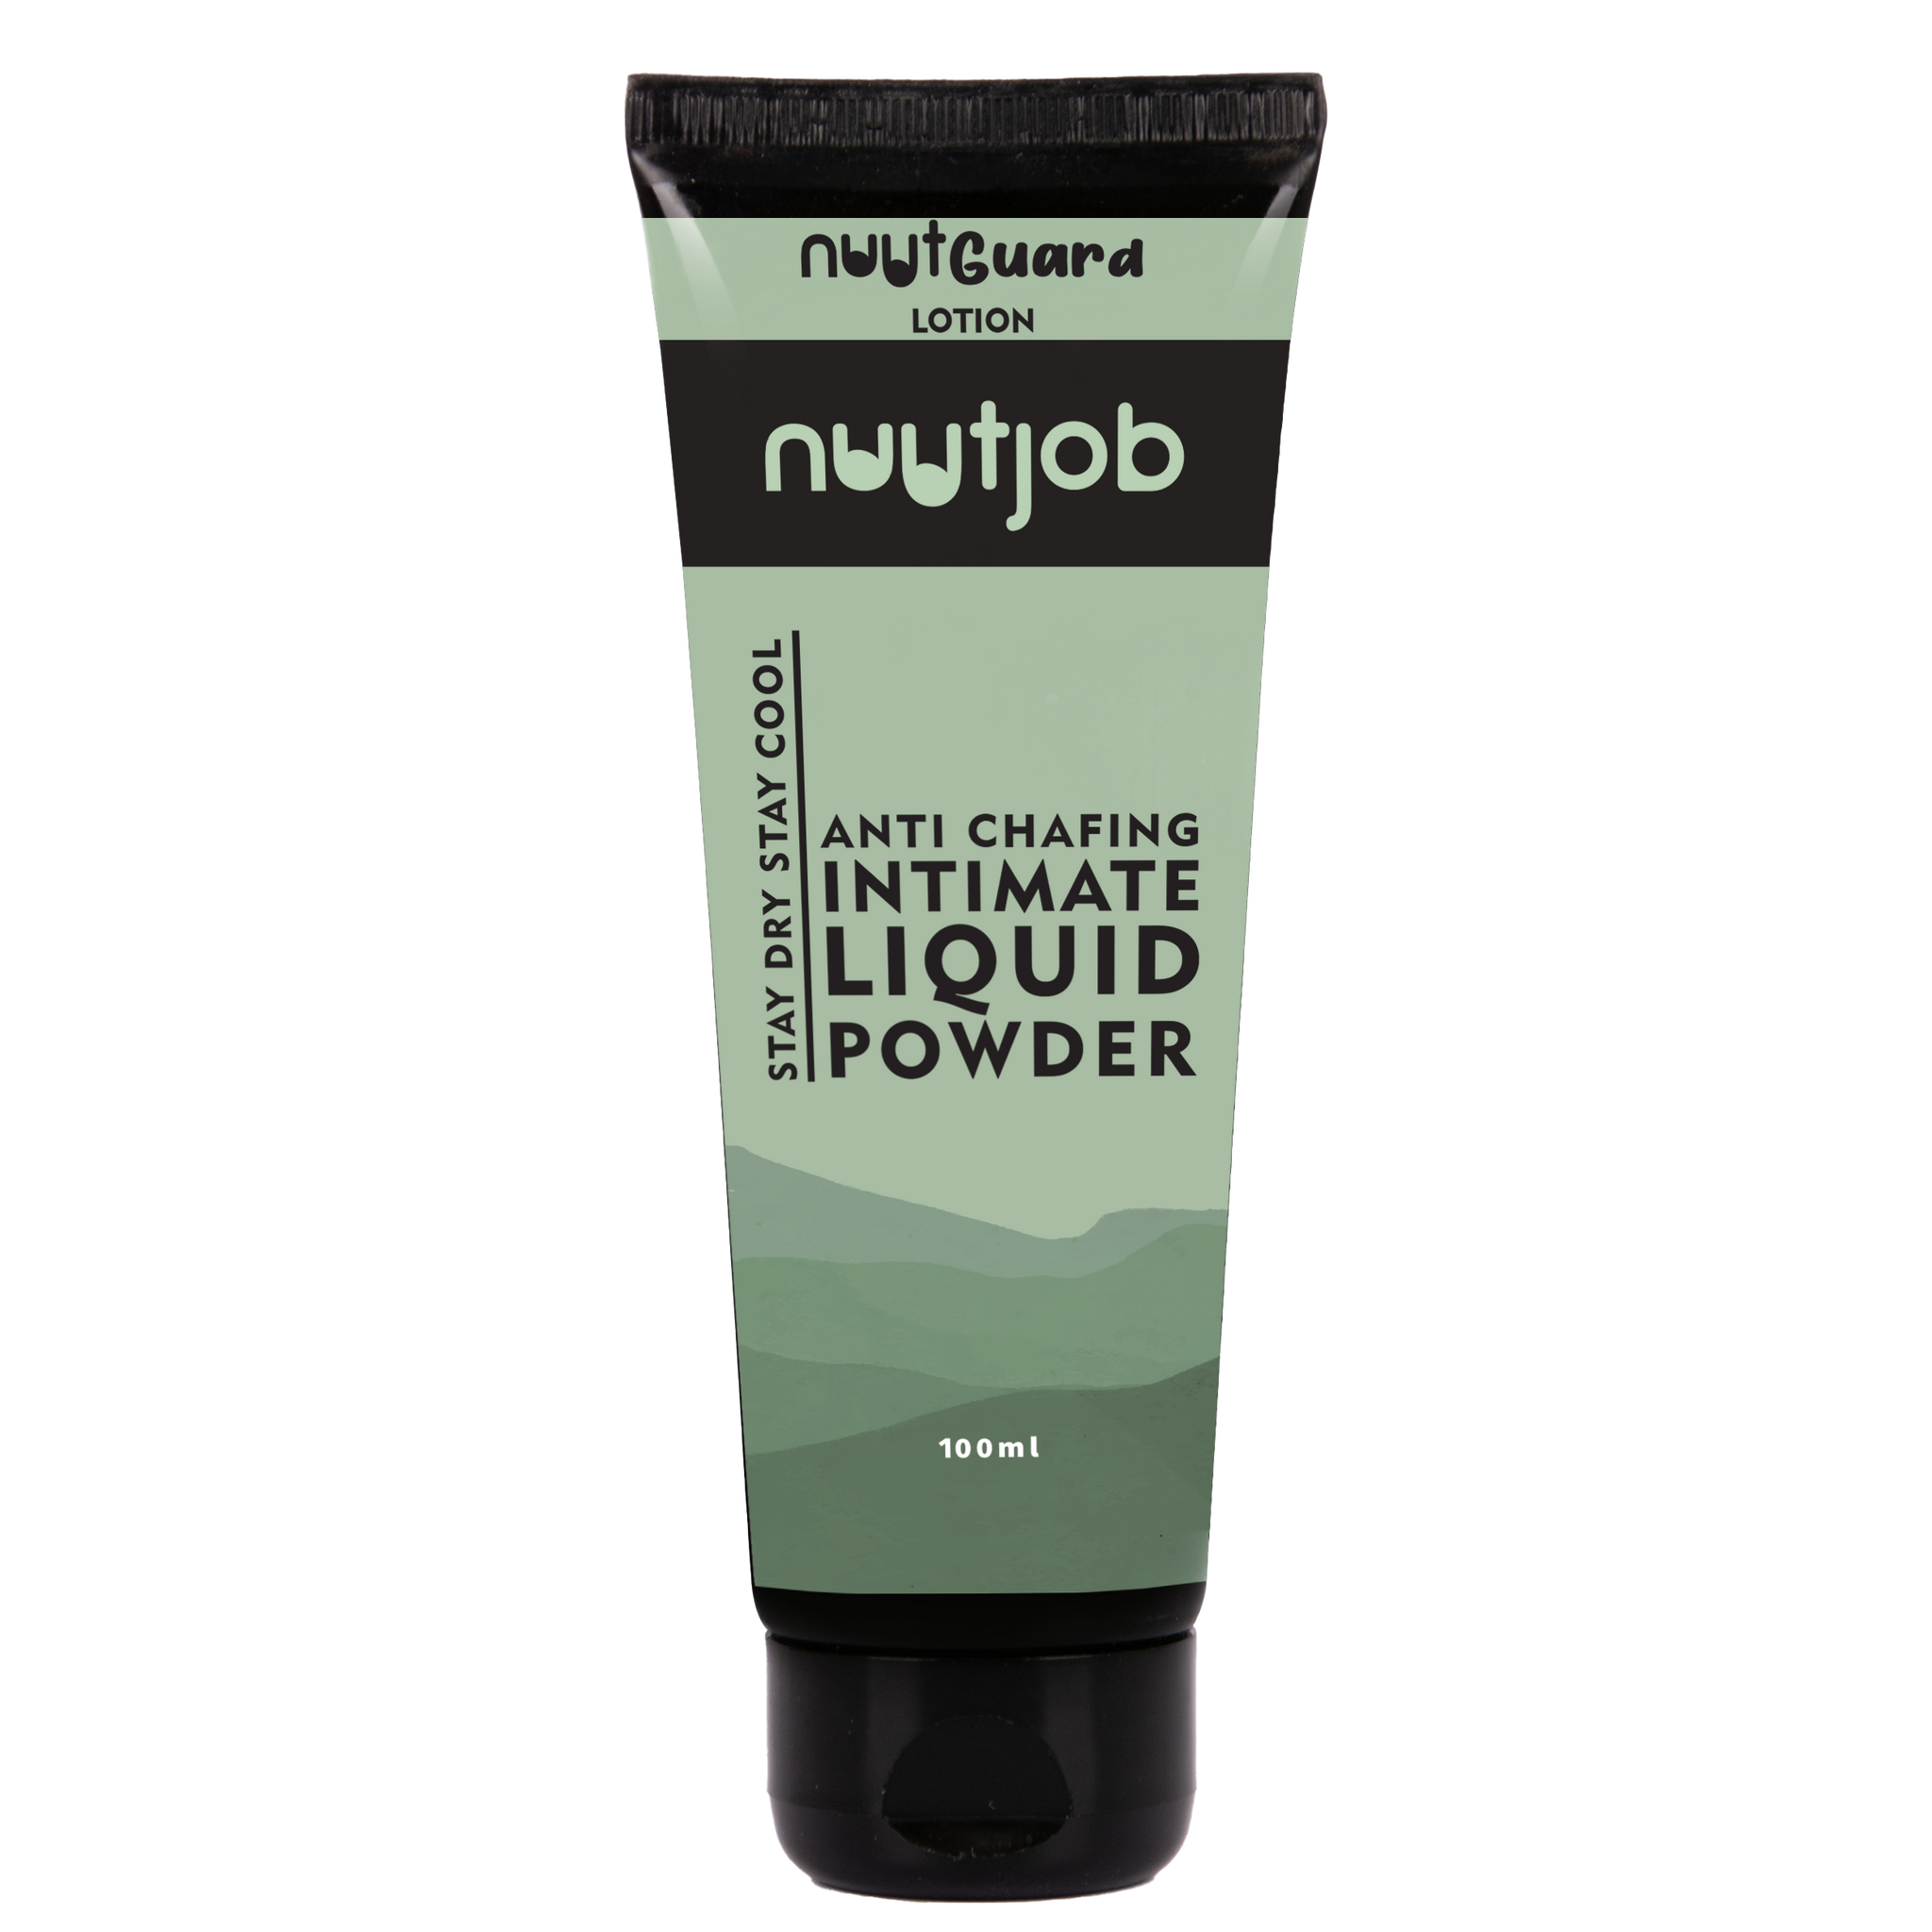 Nuutguard Intimate Liquid Powder 100ml